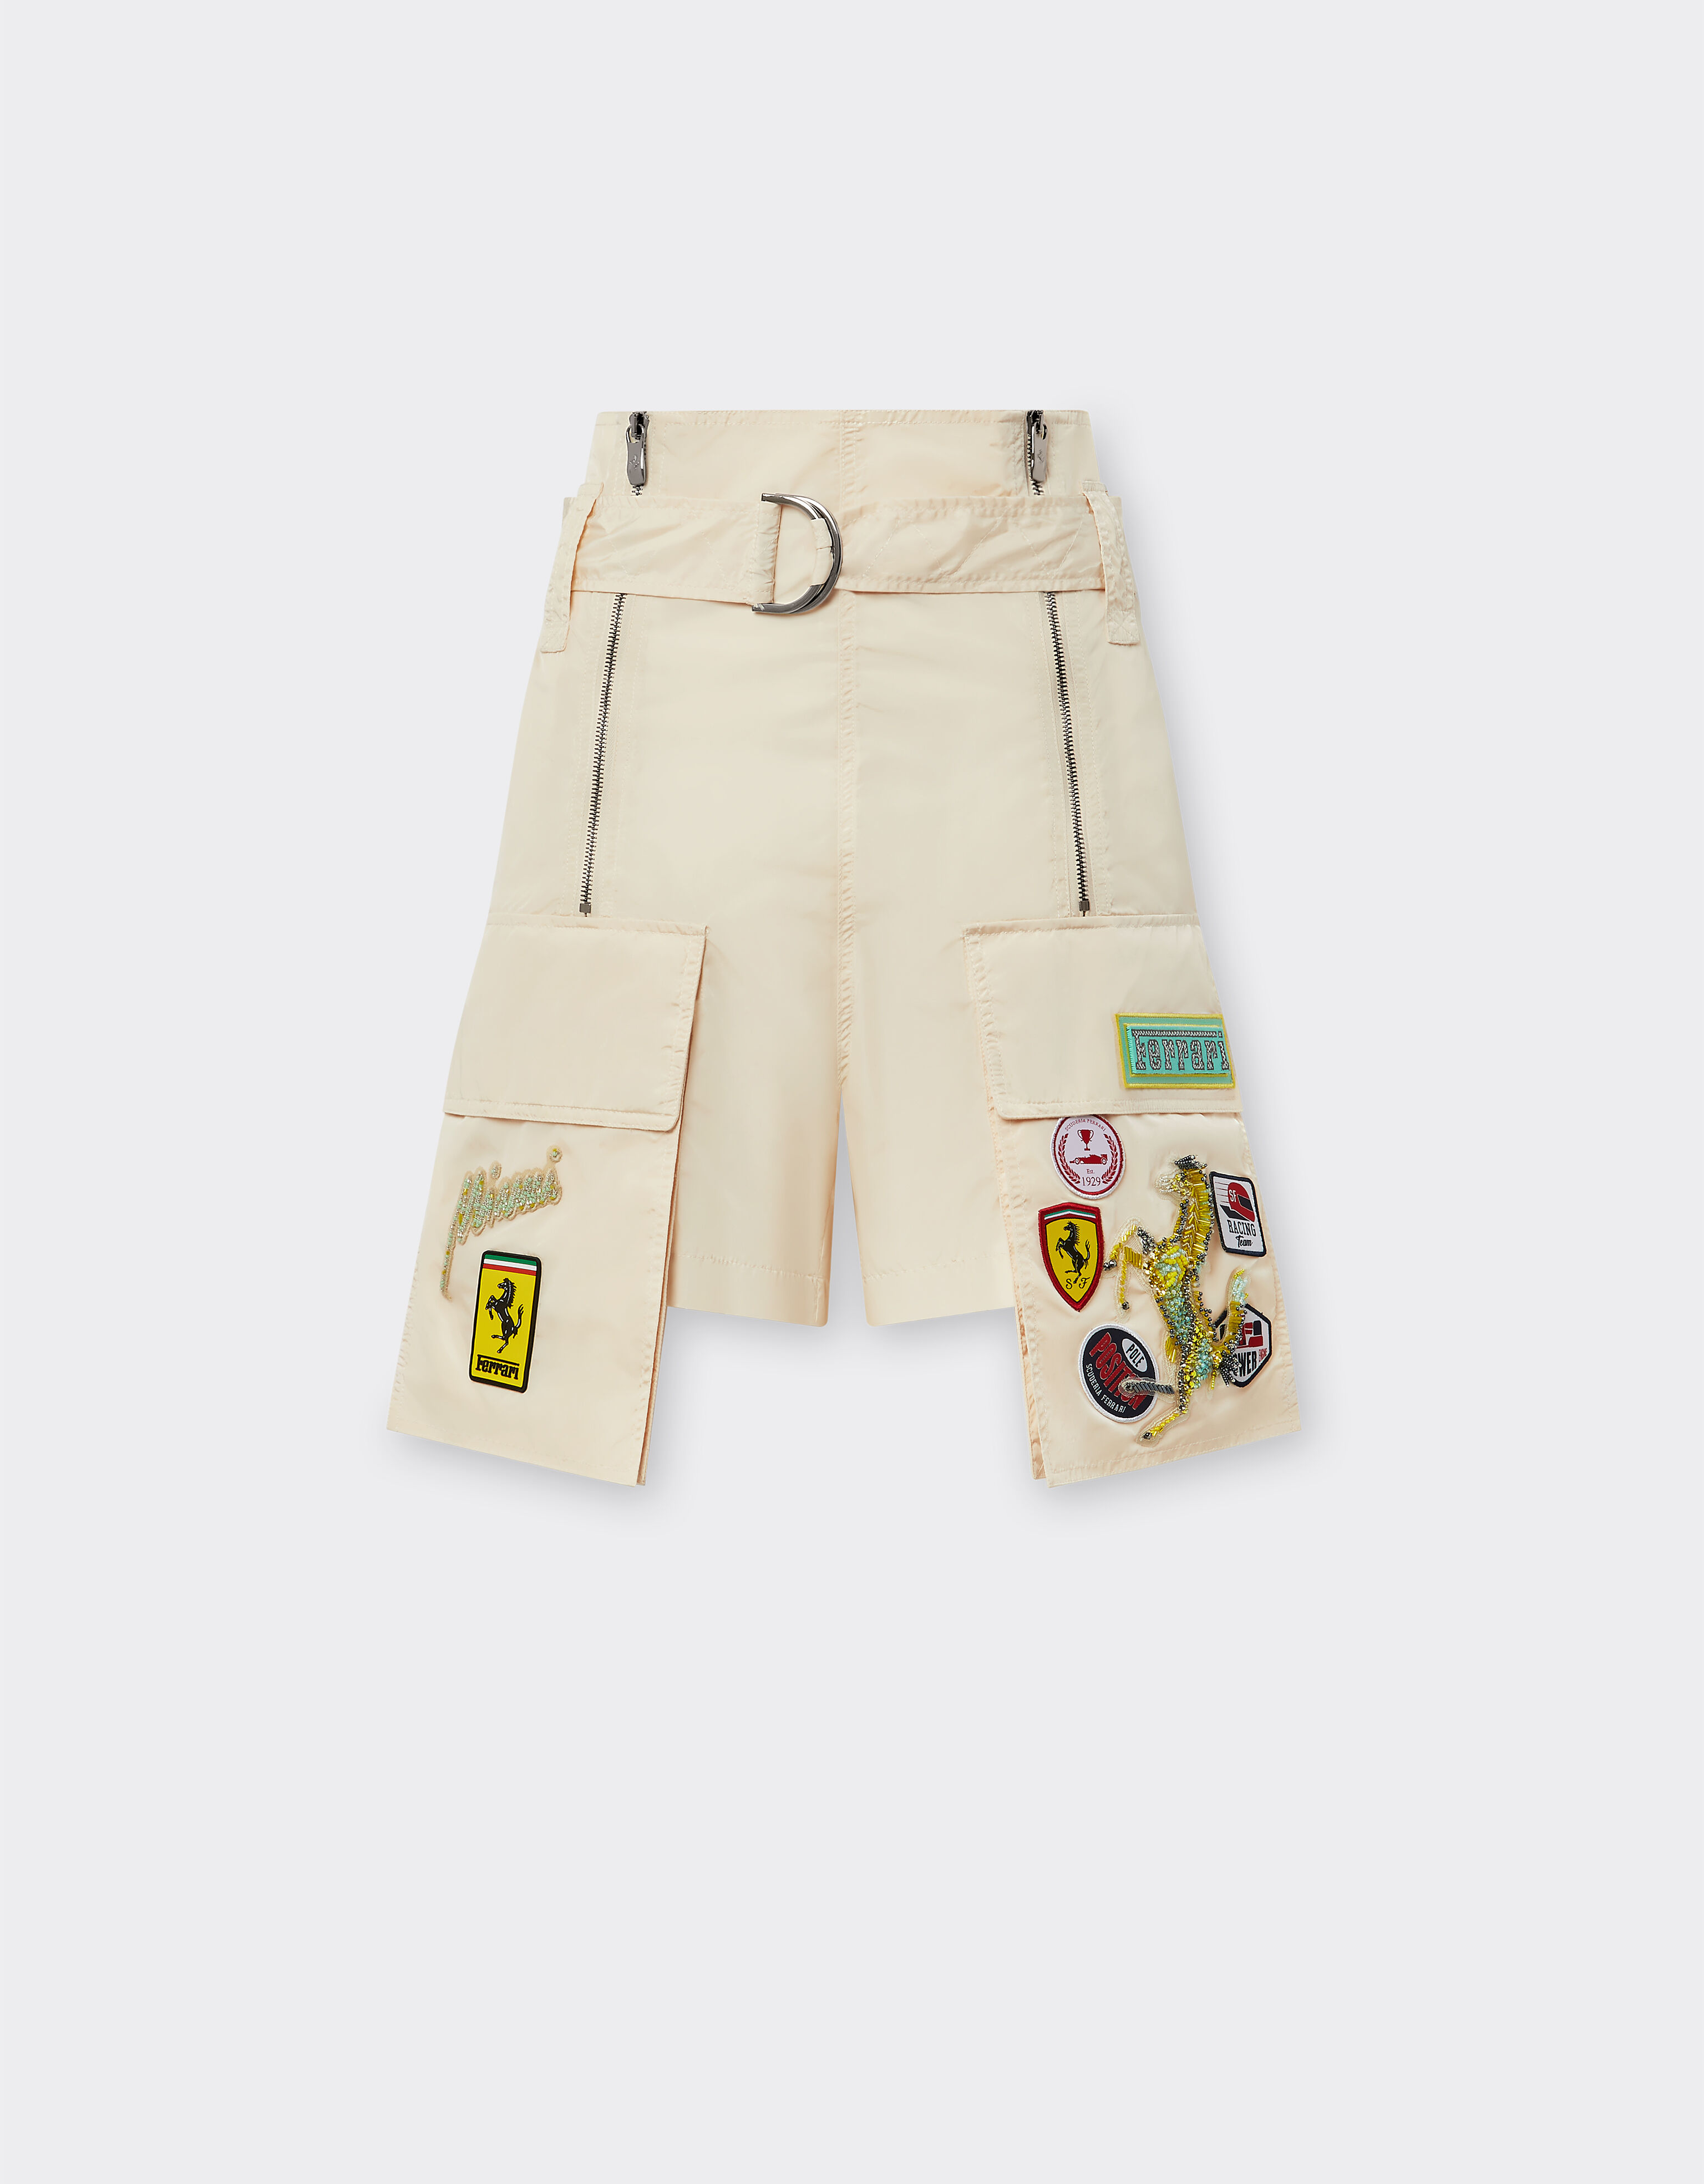 Ferrari Miami Collection nylon shorts Ivory 21248f